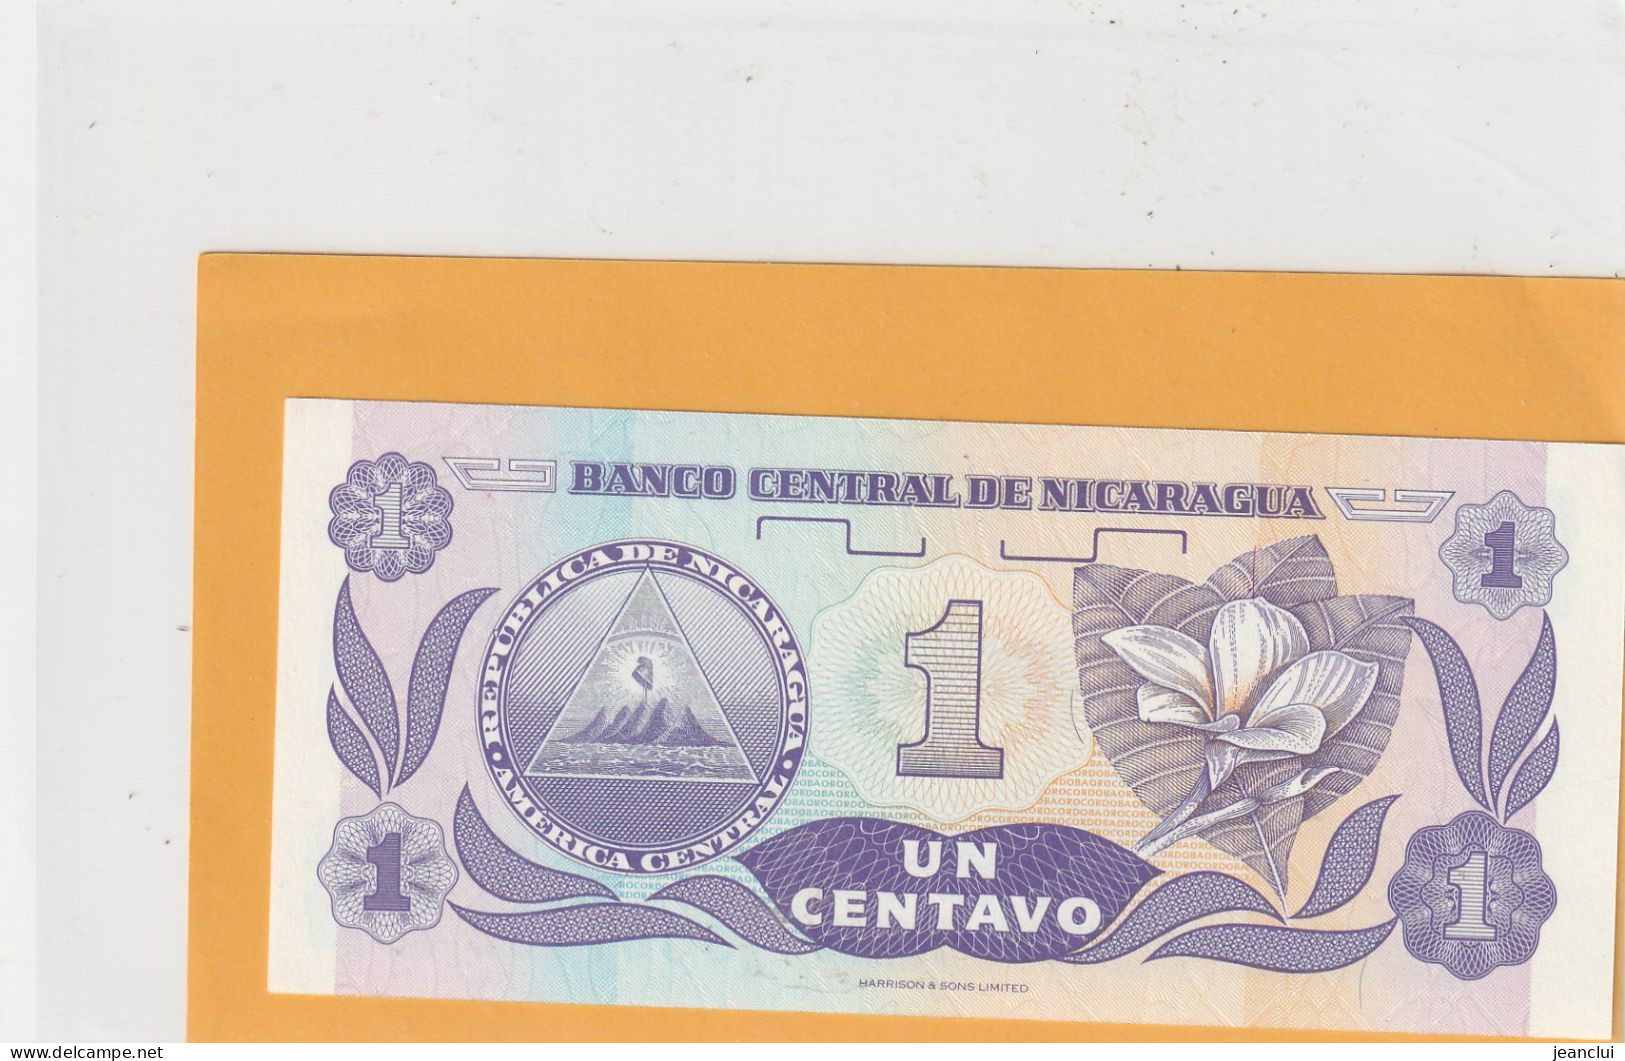 BANCO CENTRAL DE NICARAGUA .  1 CENTAVO DE CORDOBA . ND . N°  A/A 5367793 .  2 SCANNES - Nicaragua